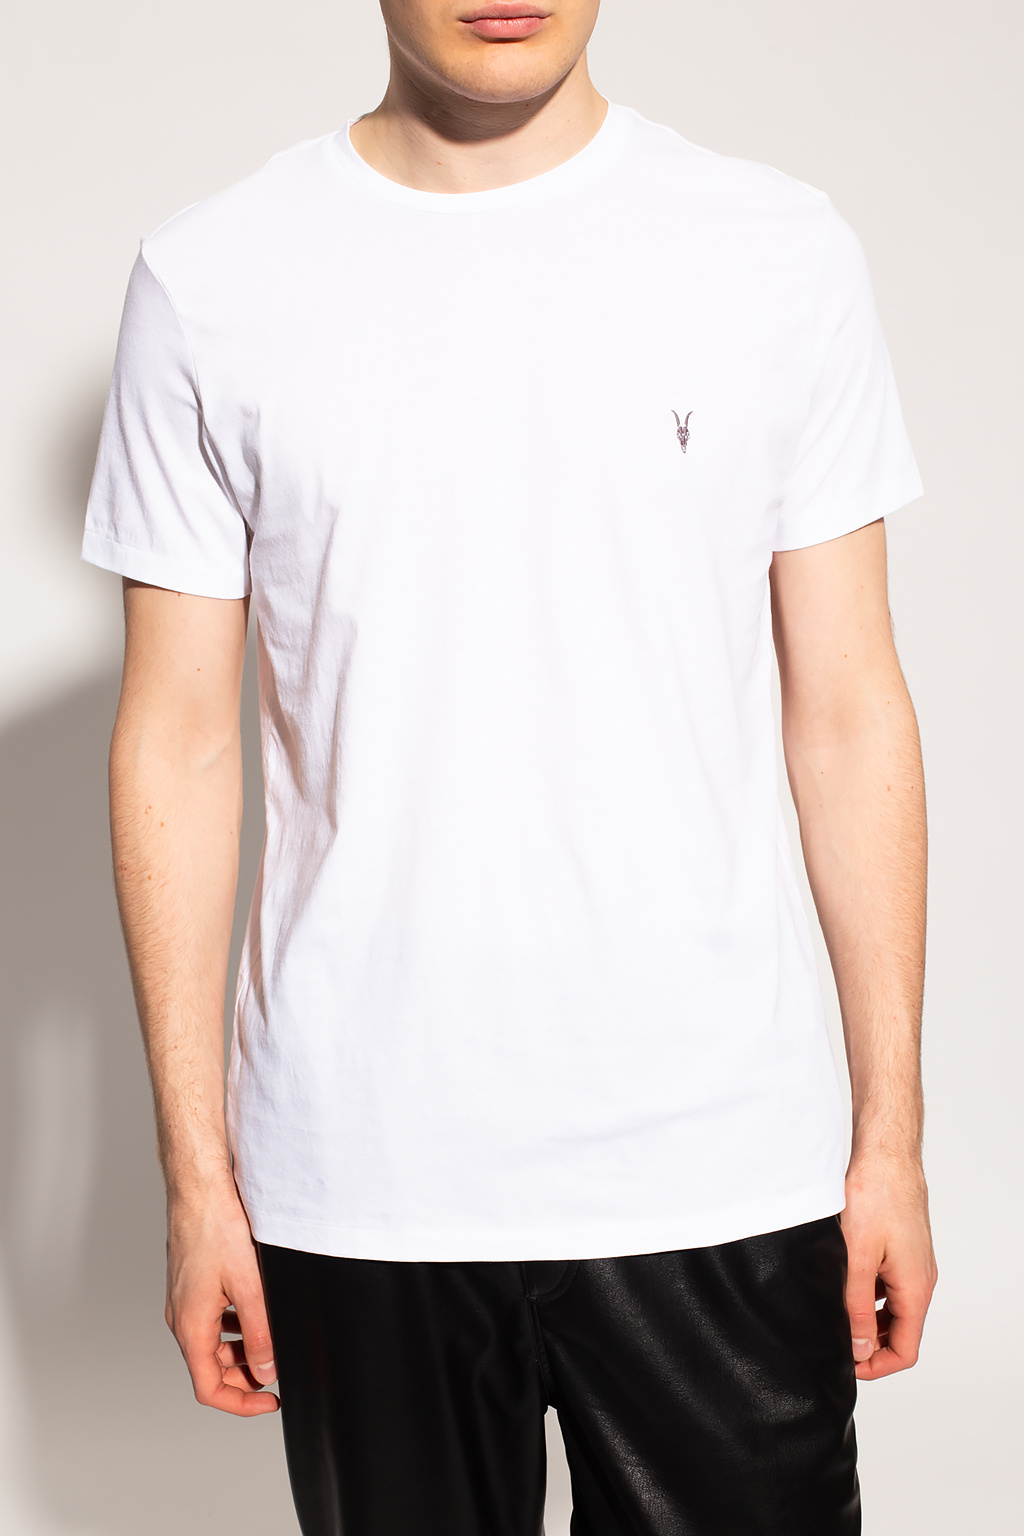 AllSaints ‘Tonic’ branded T-shirt three-pack